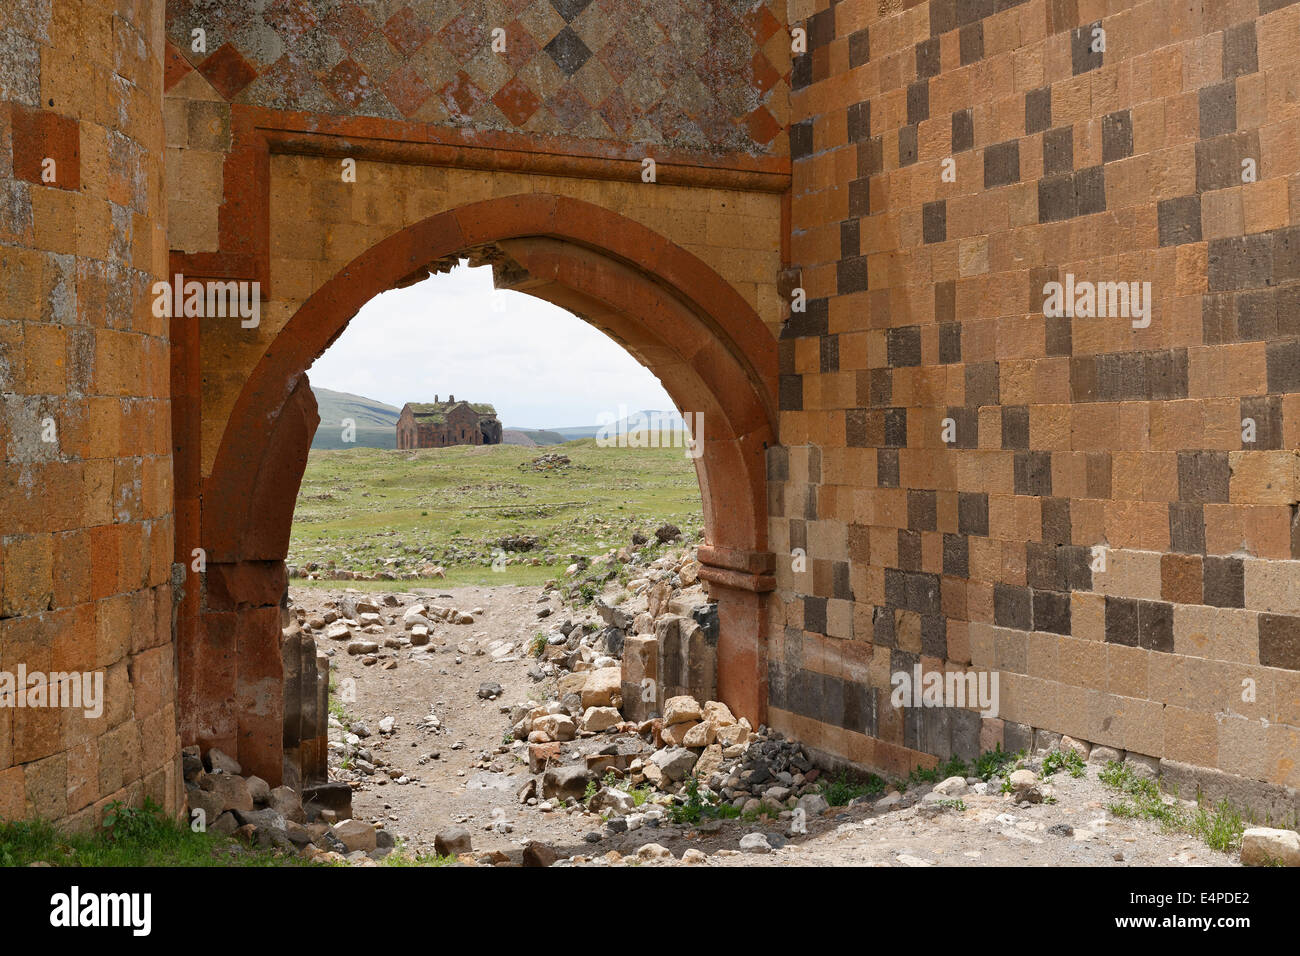 La molla porta Kapisi Hıdrellez, mura, ex capitale armena Ani, Kars, Via della Seta, Anatolia Orientale Regione, Anatolia Foto Stock